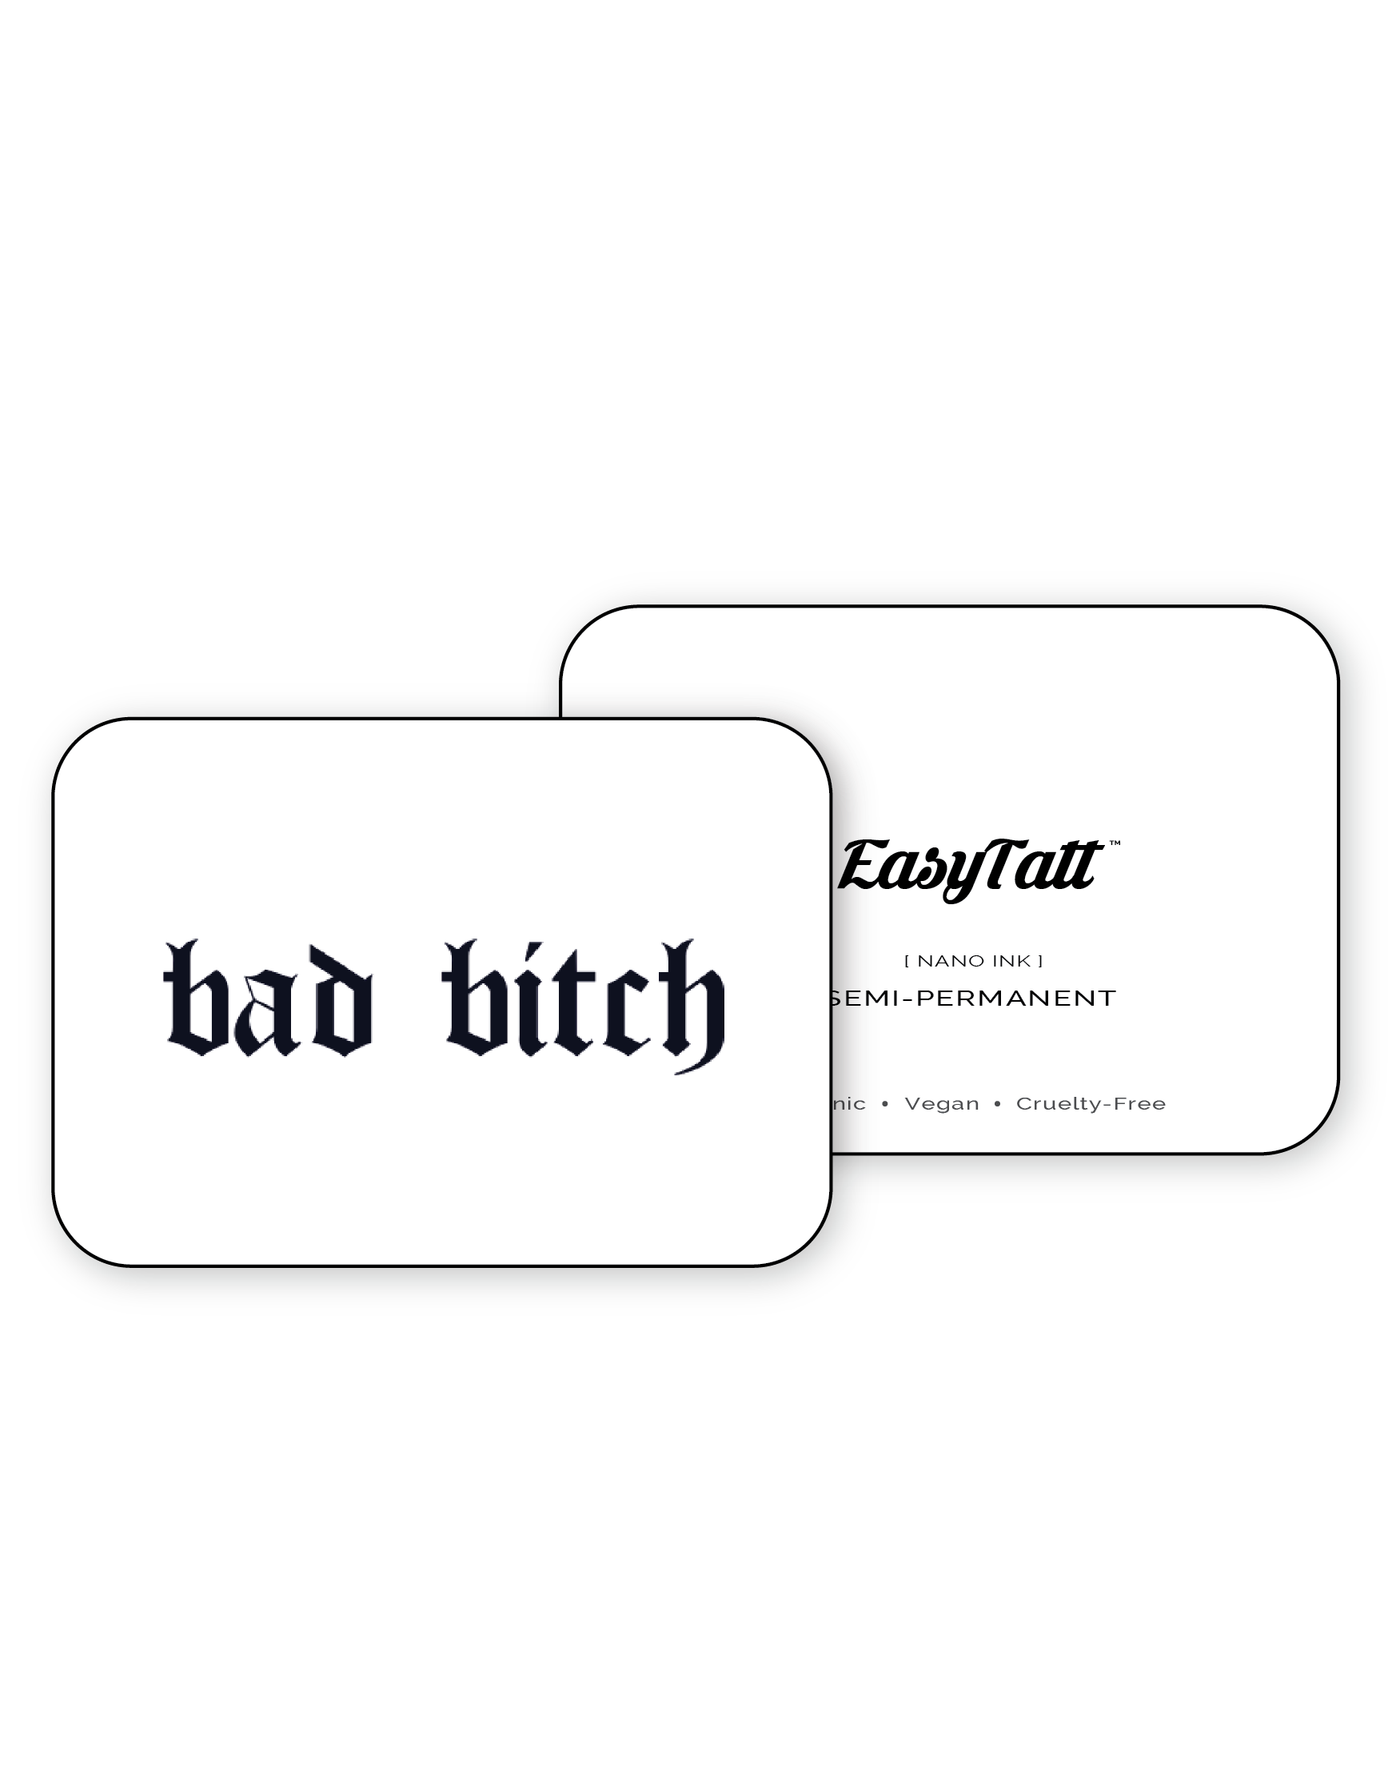 (NEW) Bad bitch x 2